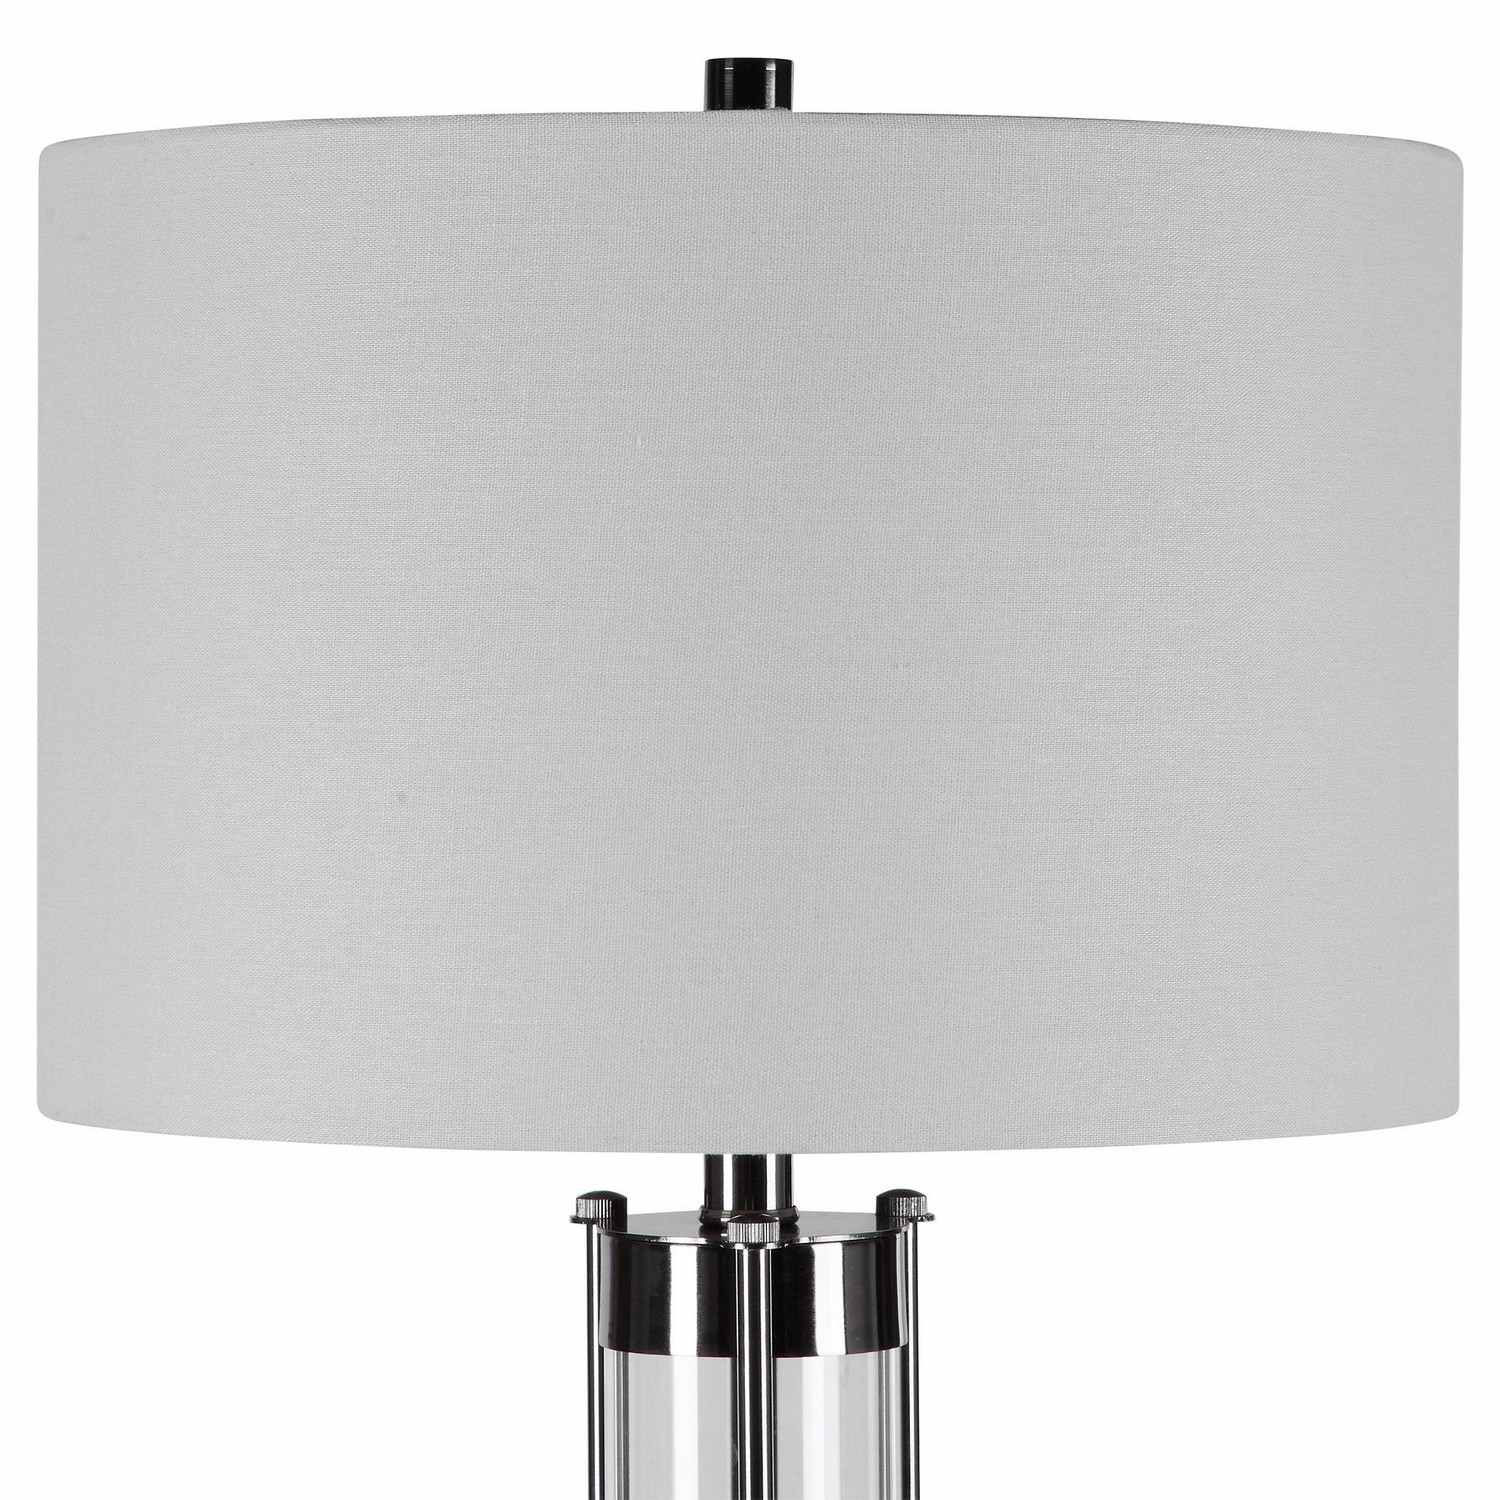 Uttermost W26055-1 Table Lamp - Black Nickel